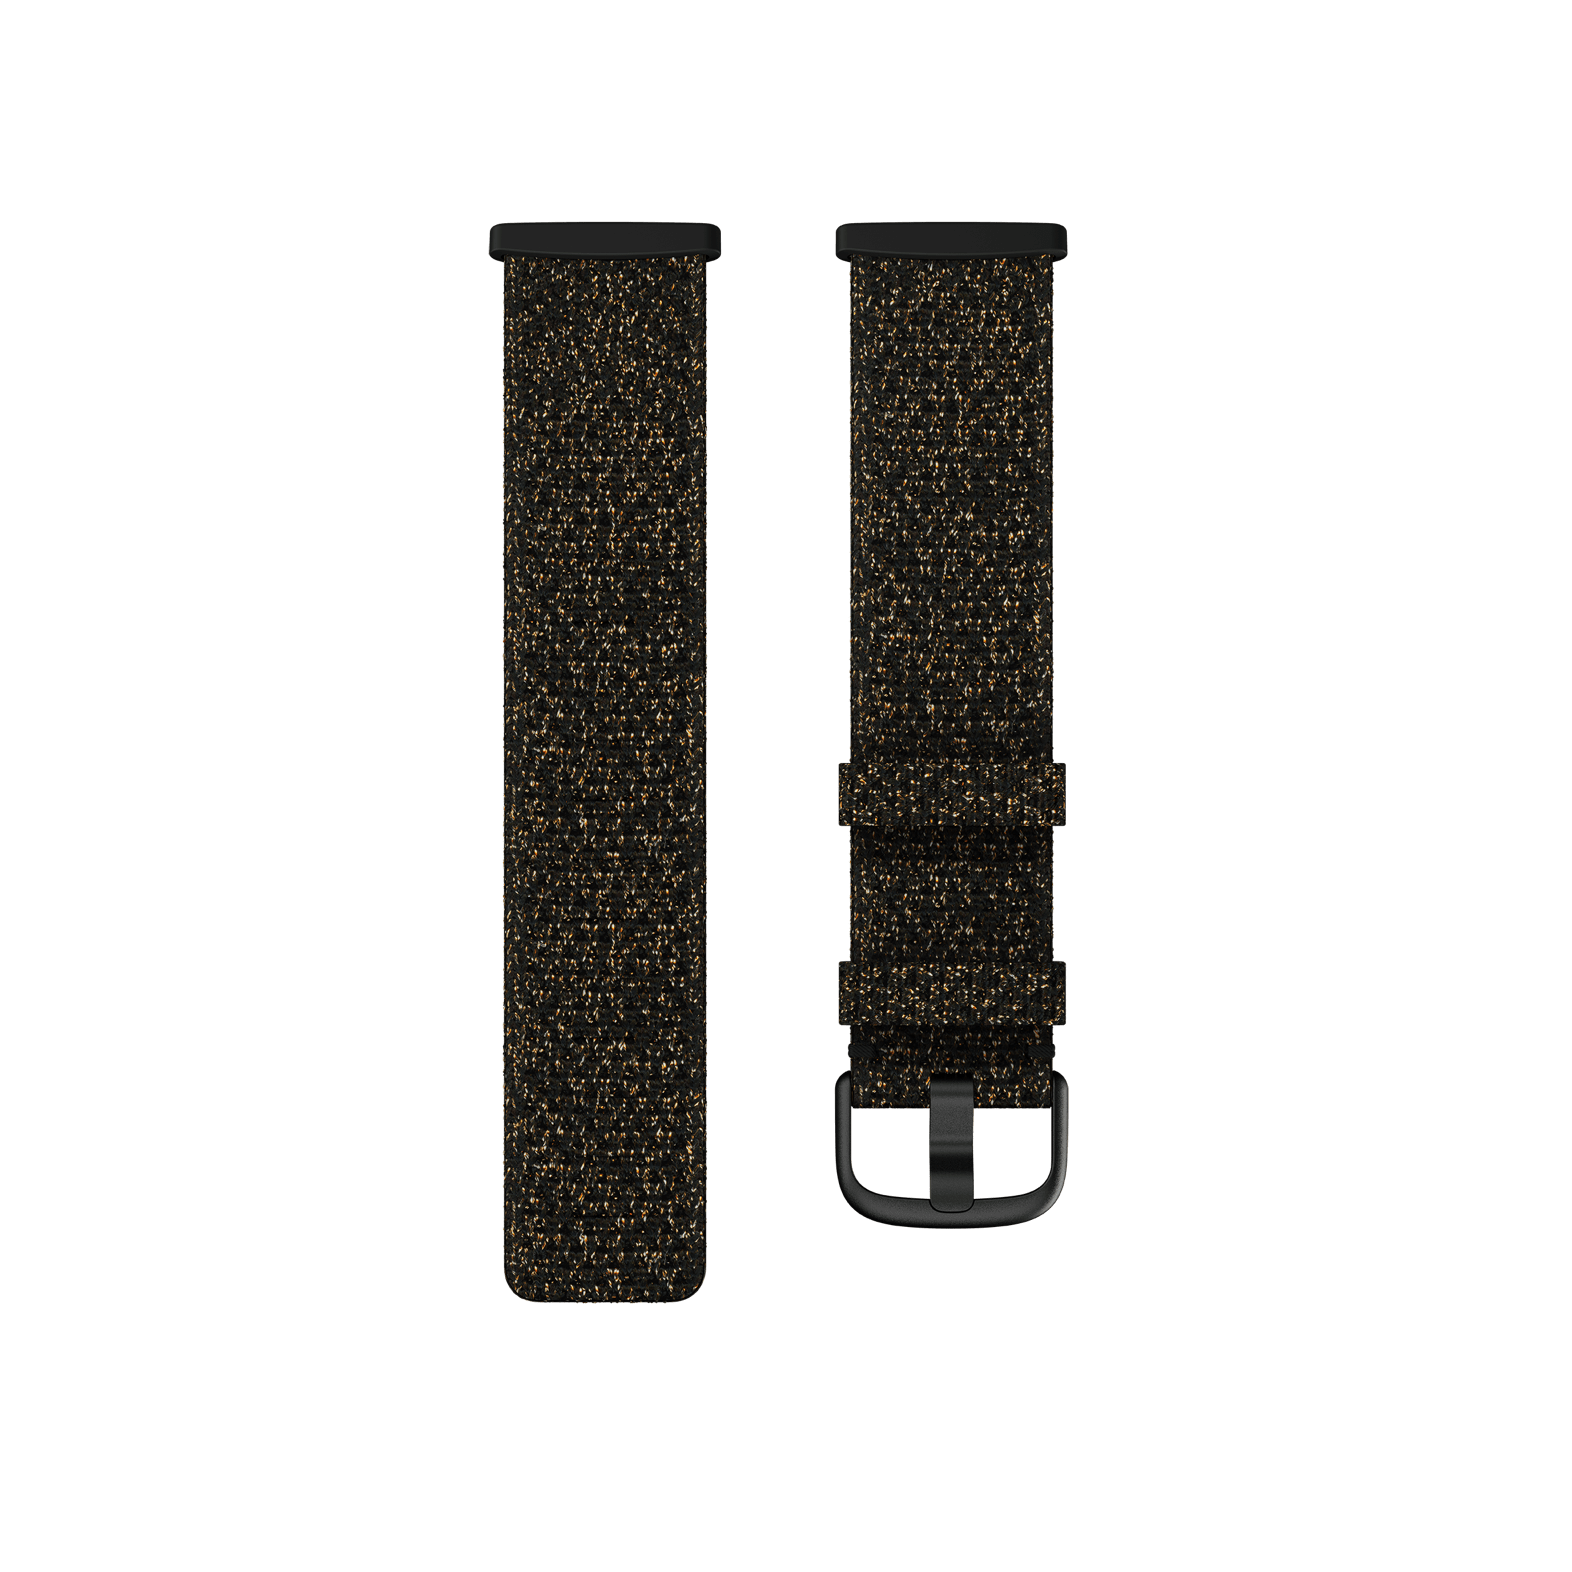 Fitbit Victor Glemaud Versa 3/Sense Knit Bands By GetGear